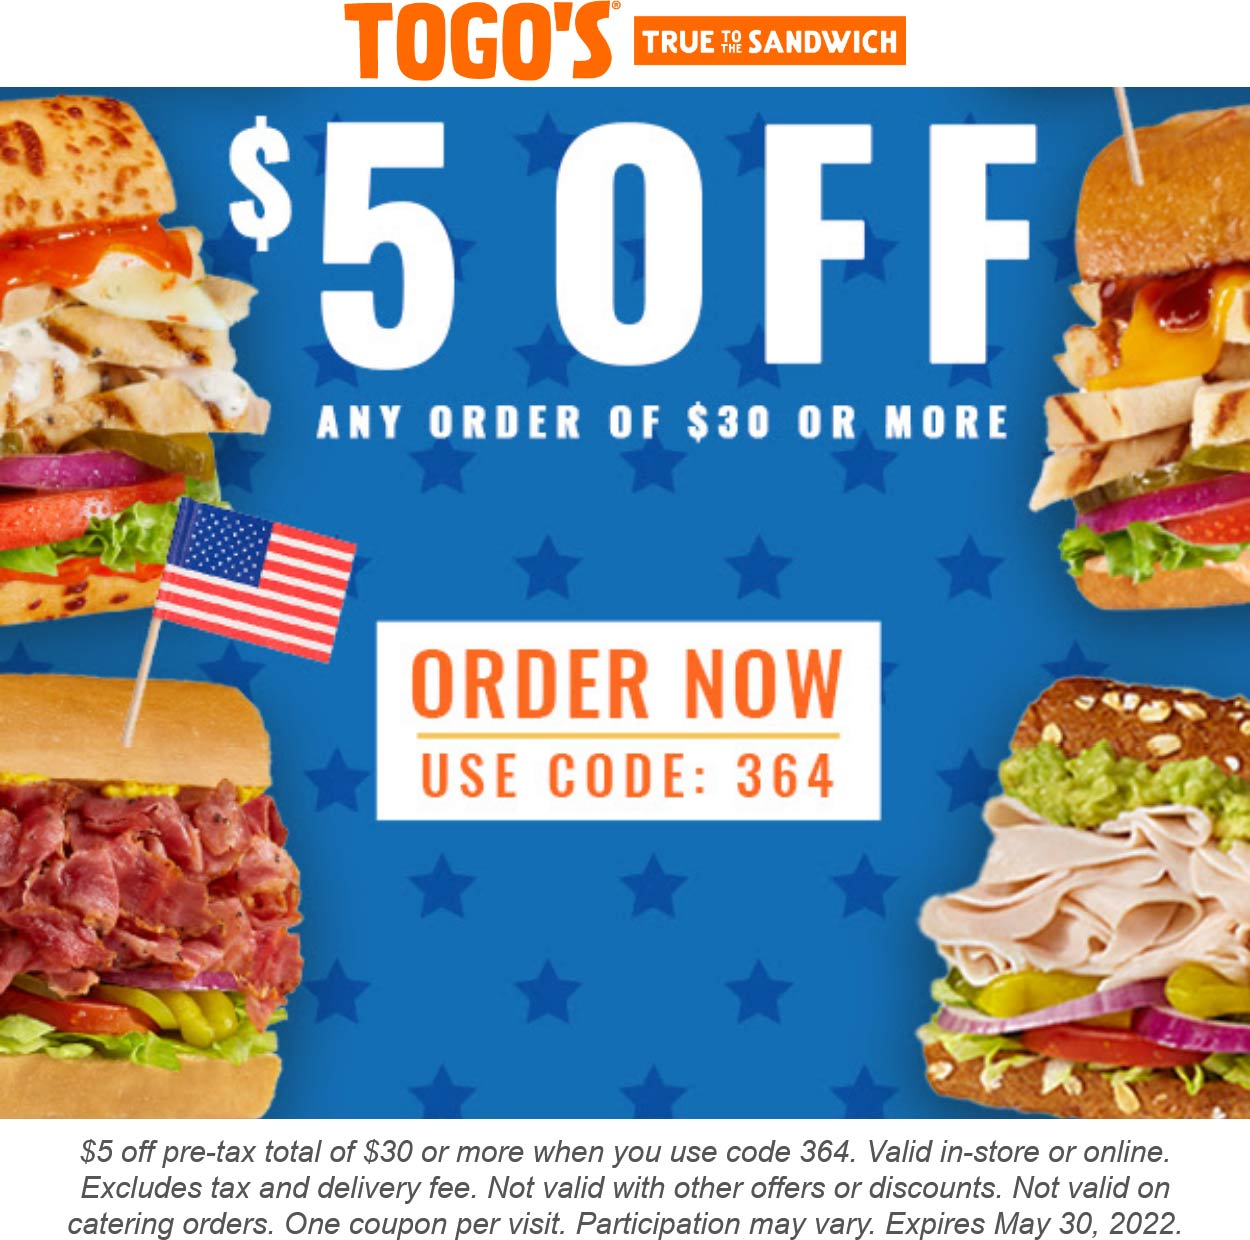 Togos restaurants Coupon  $5 off $30 at Togos True to the Sandwich via promo code 364 #togos 